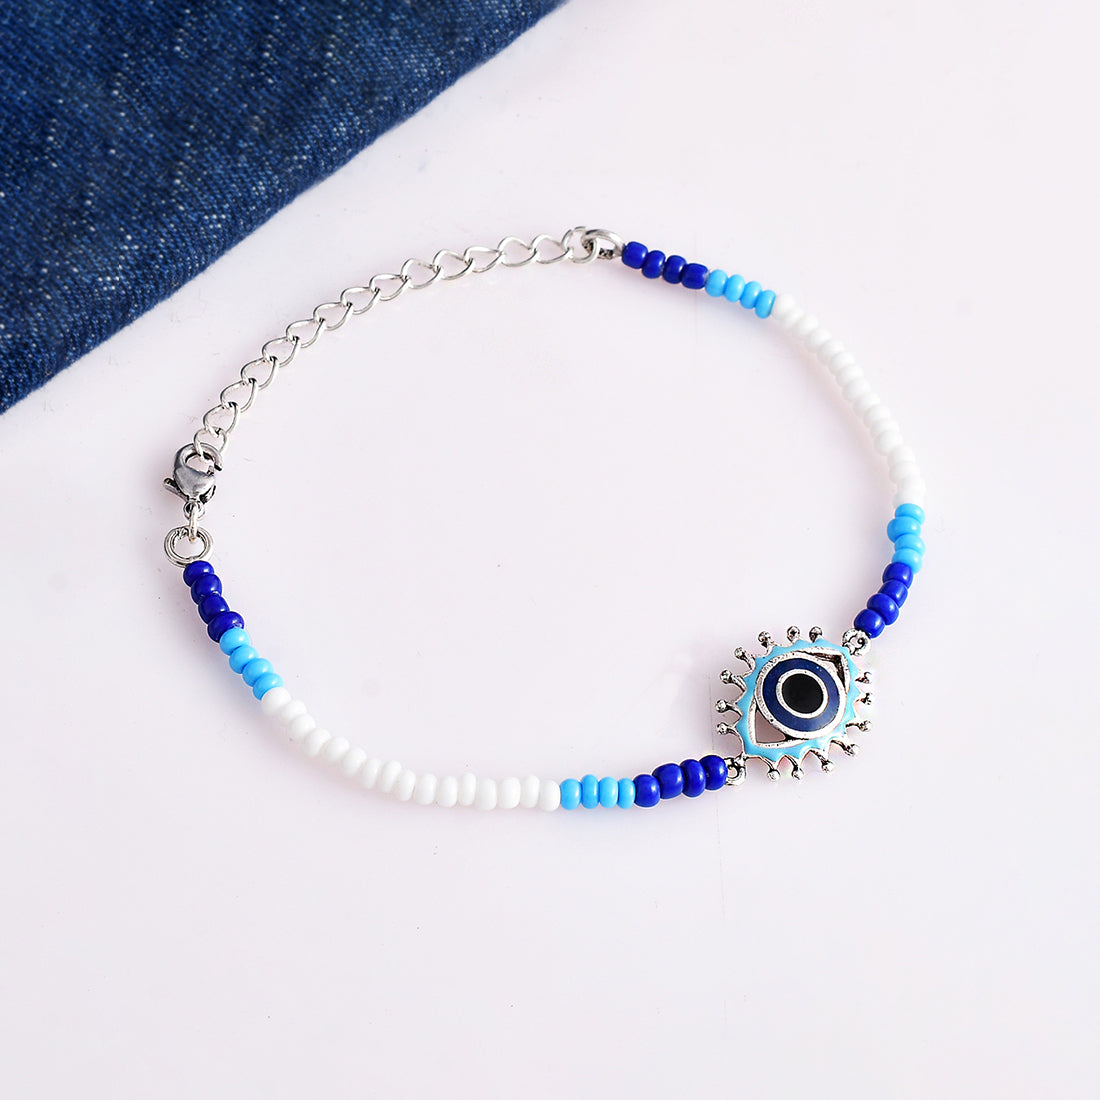 Evil Eye Blue-White Beads Silver Oxidized Chain Bracelet